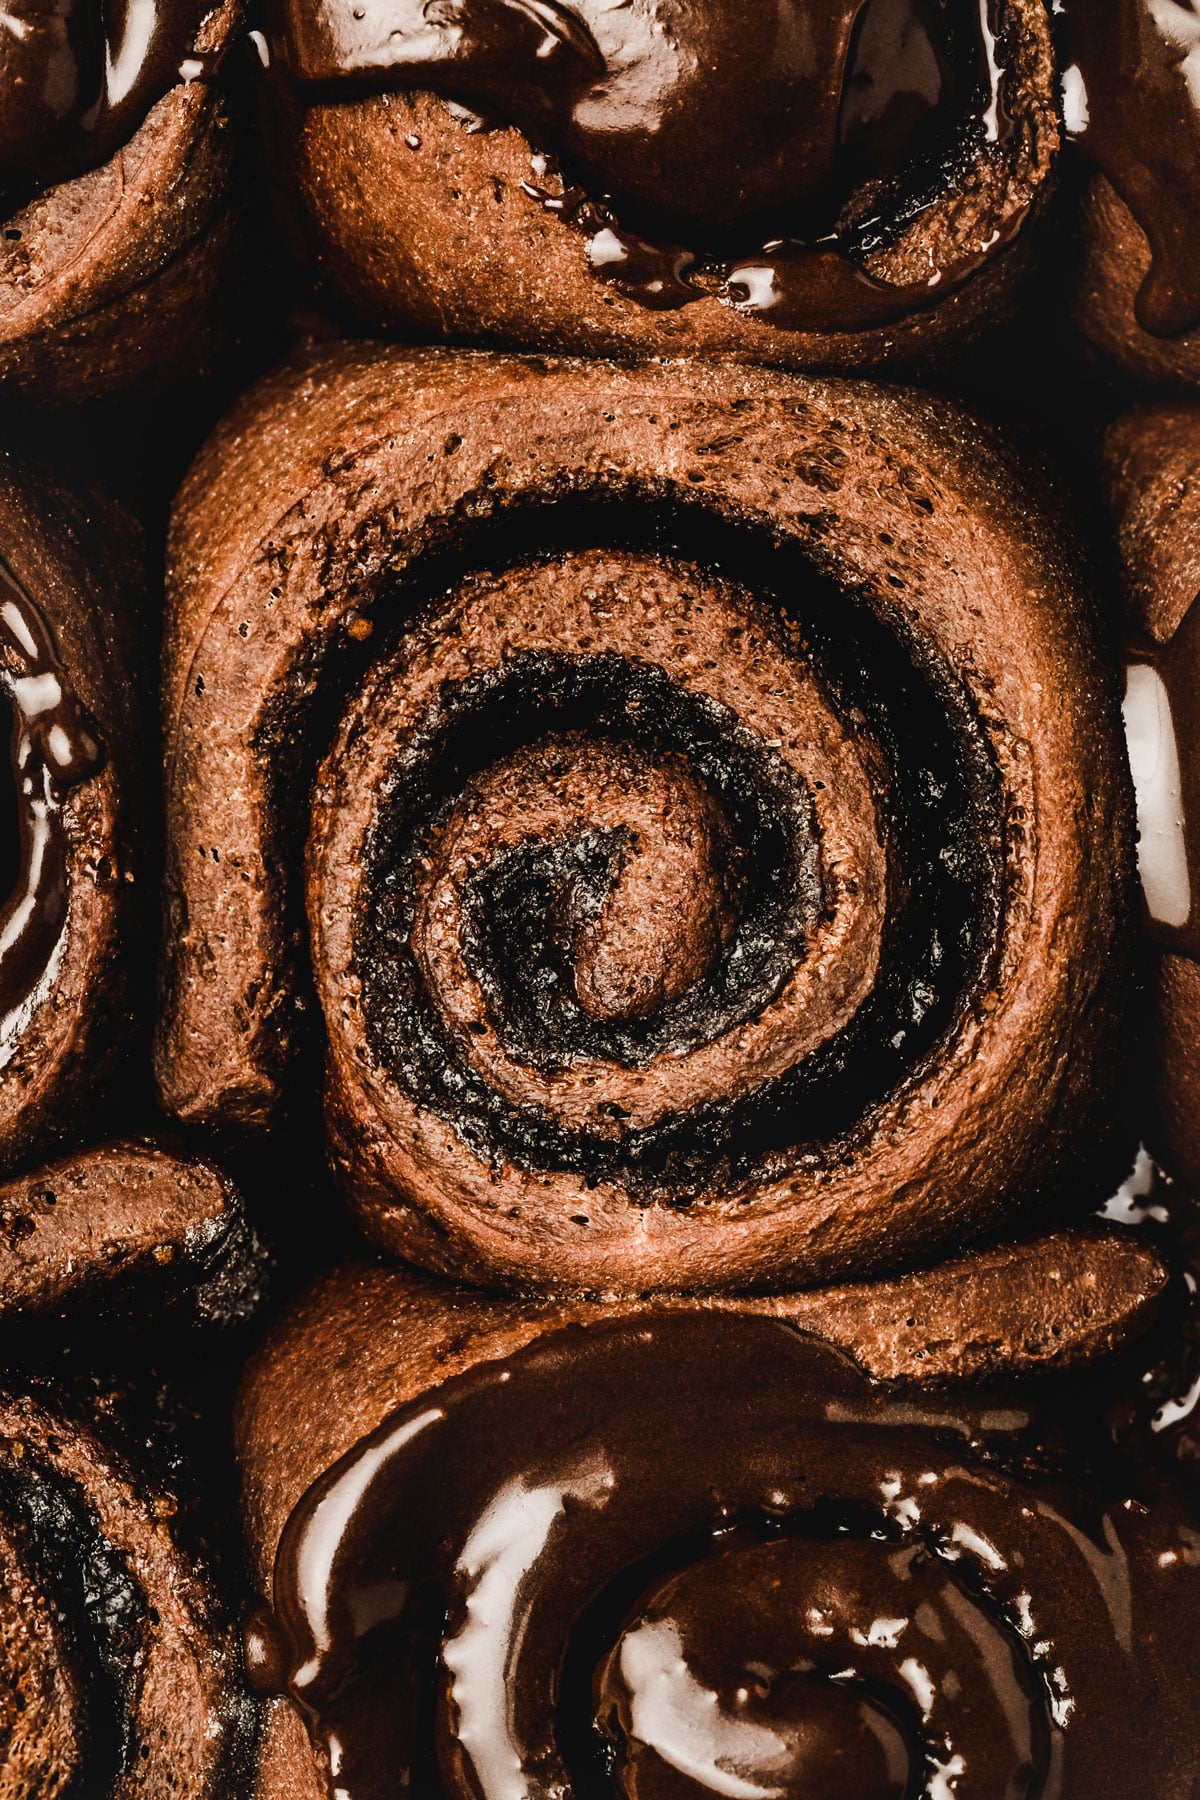 Chocolate roll with chocolate glaze